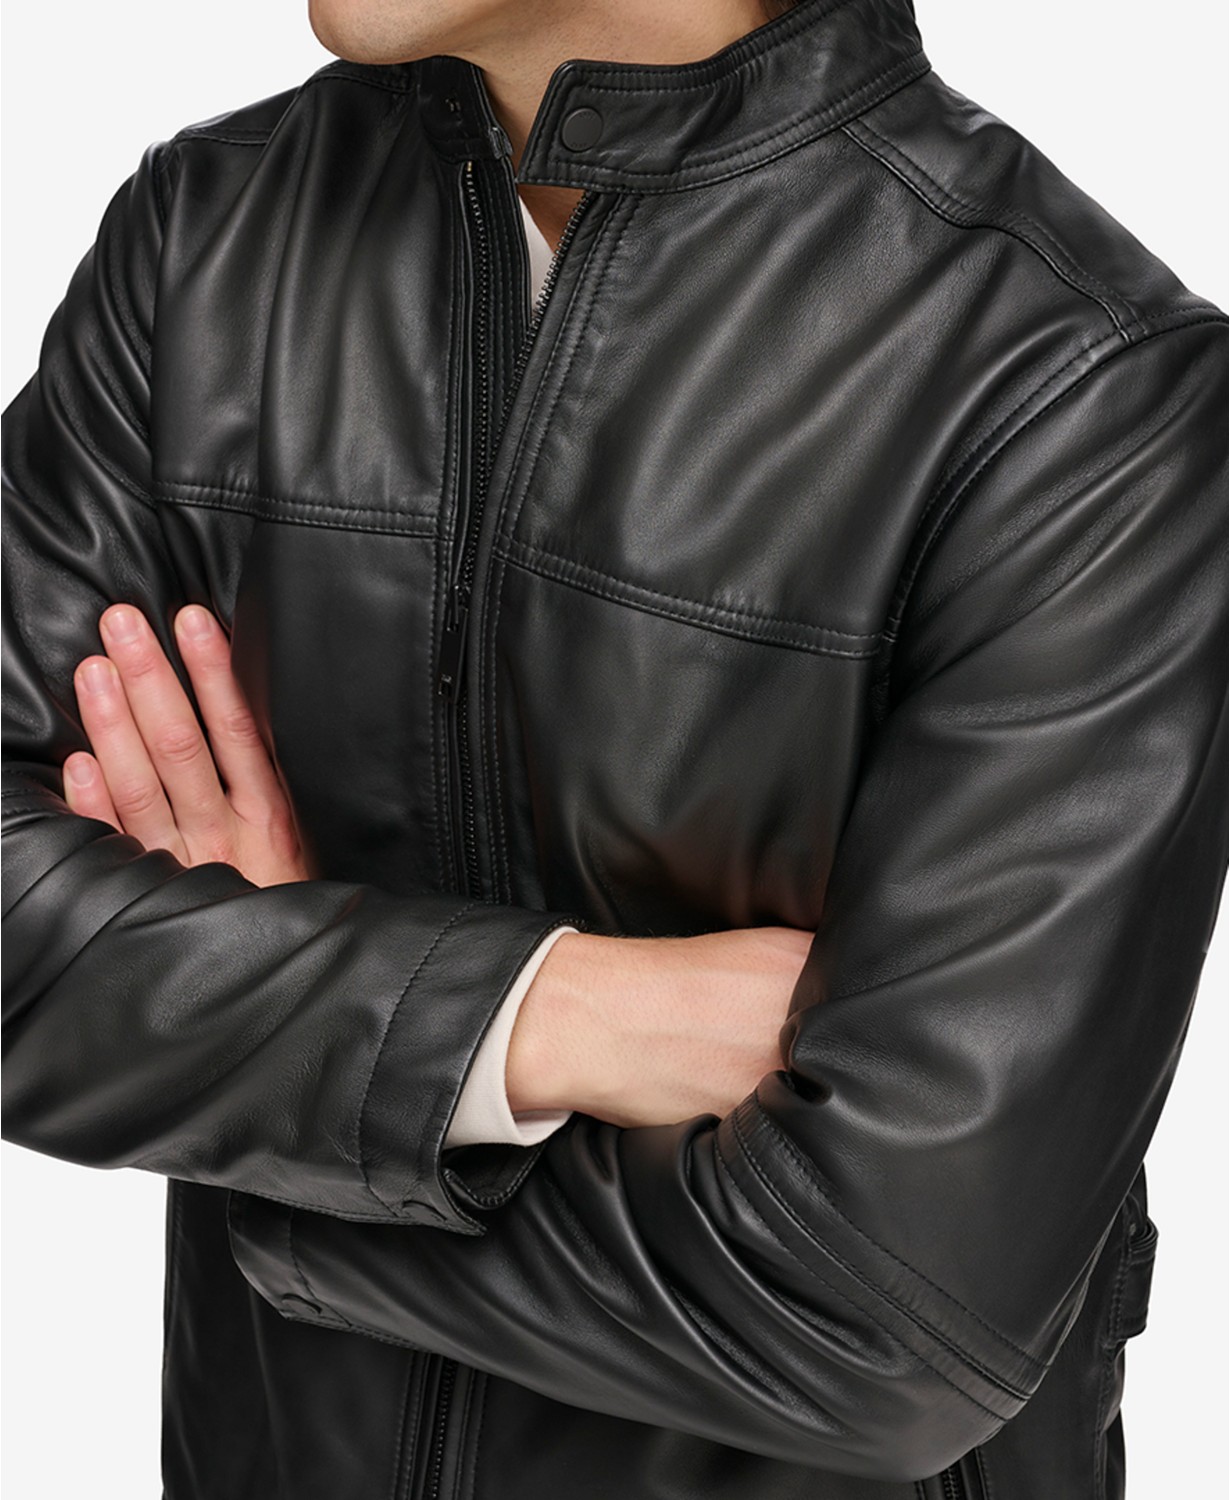 DKNY Mens Leather Racer Jacket